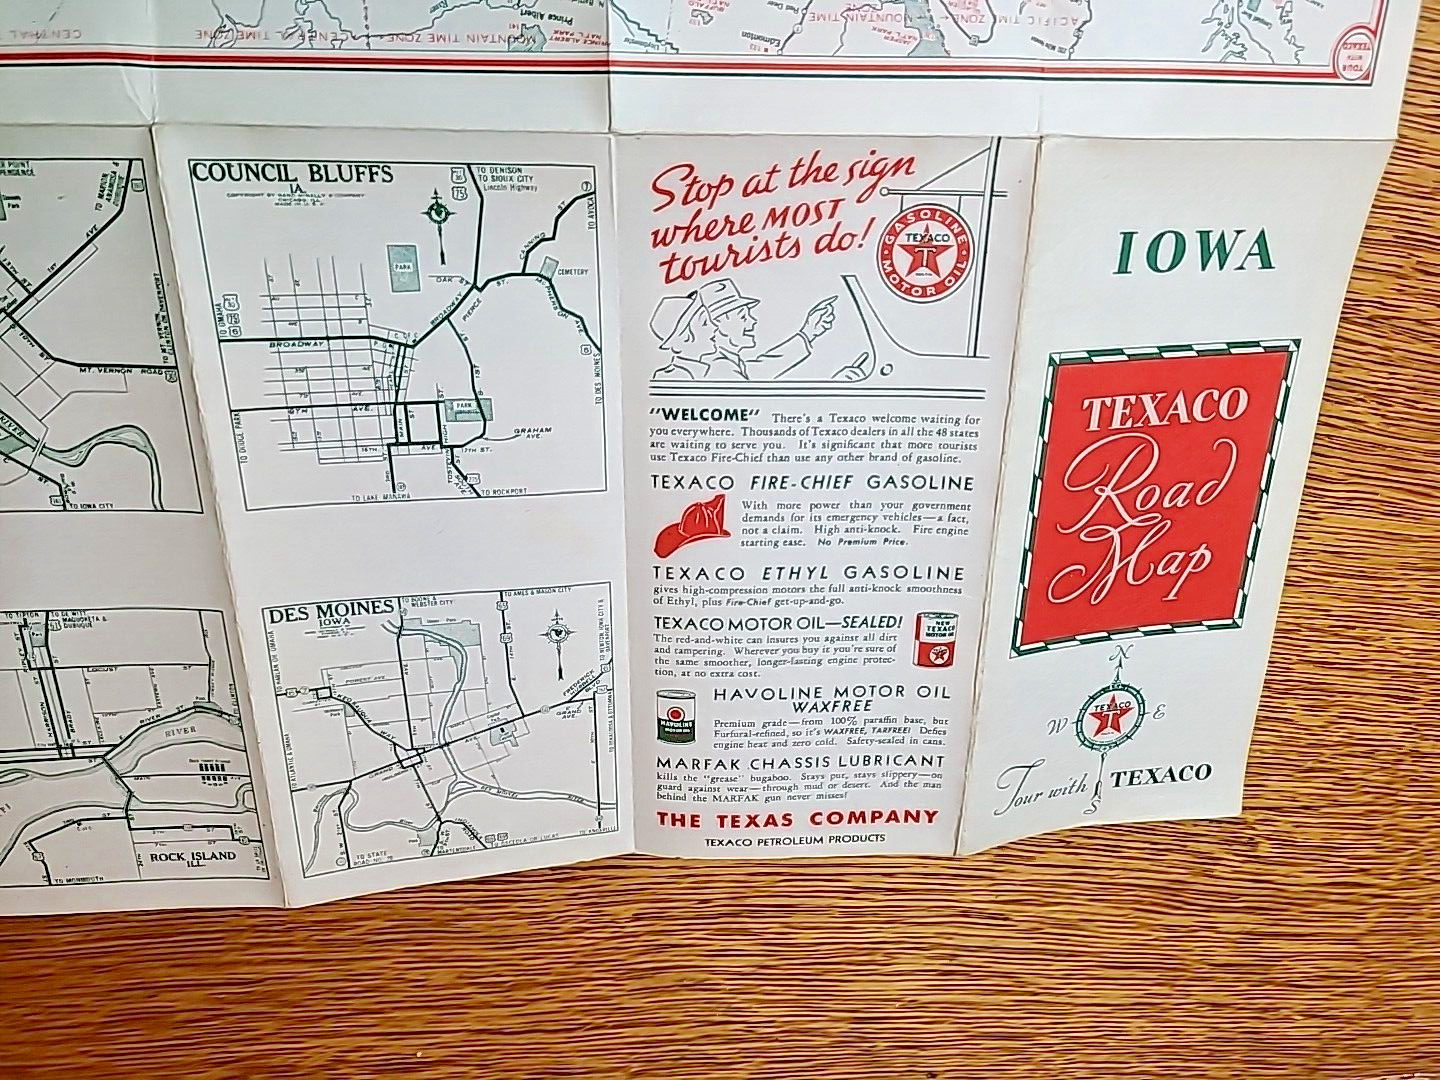 1936 Iowa Texaco Road Map